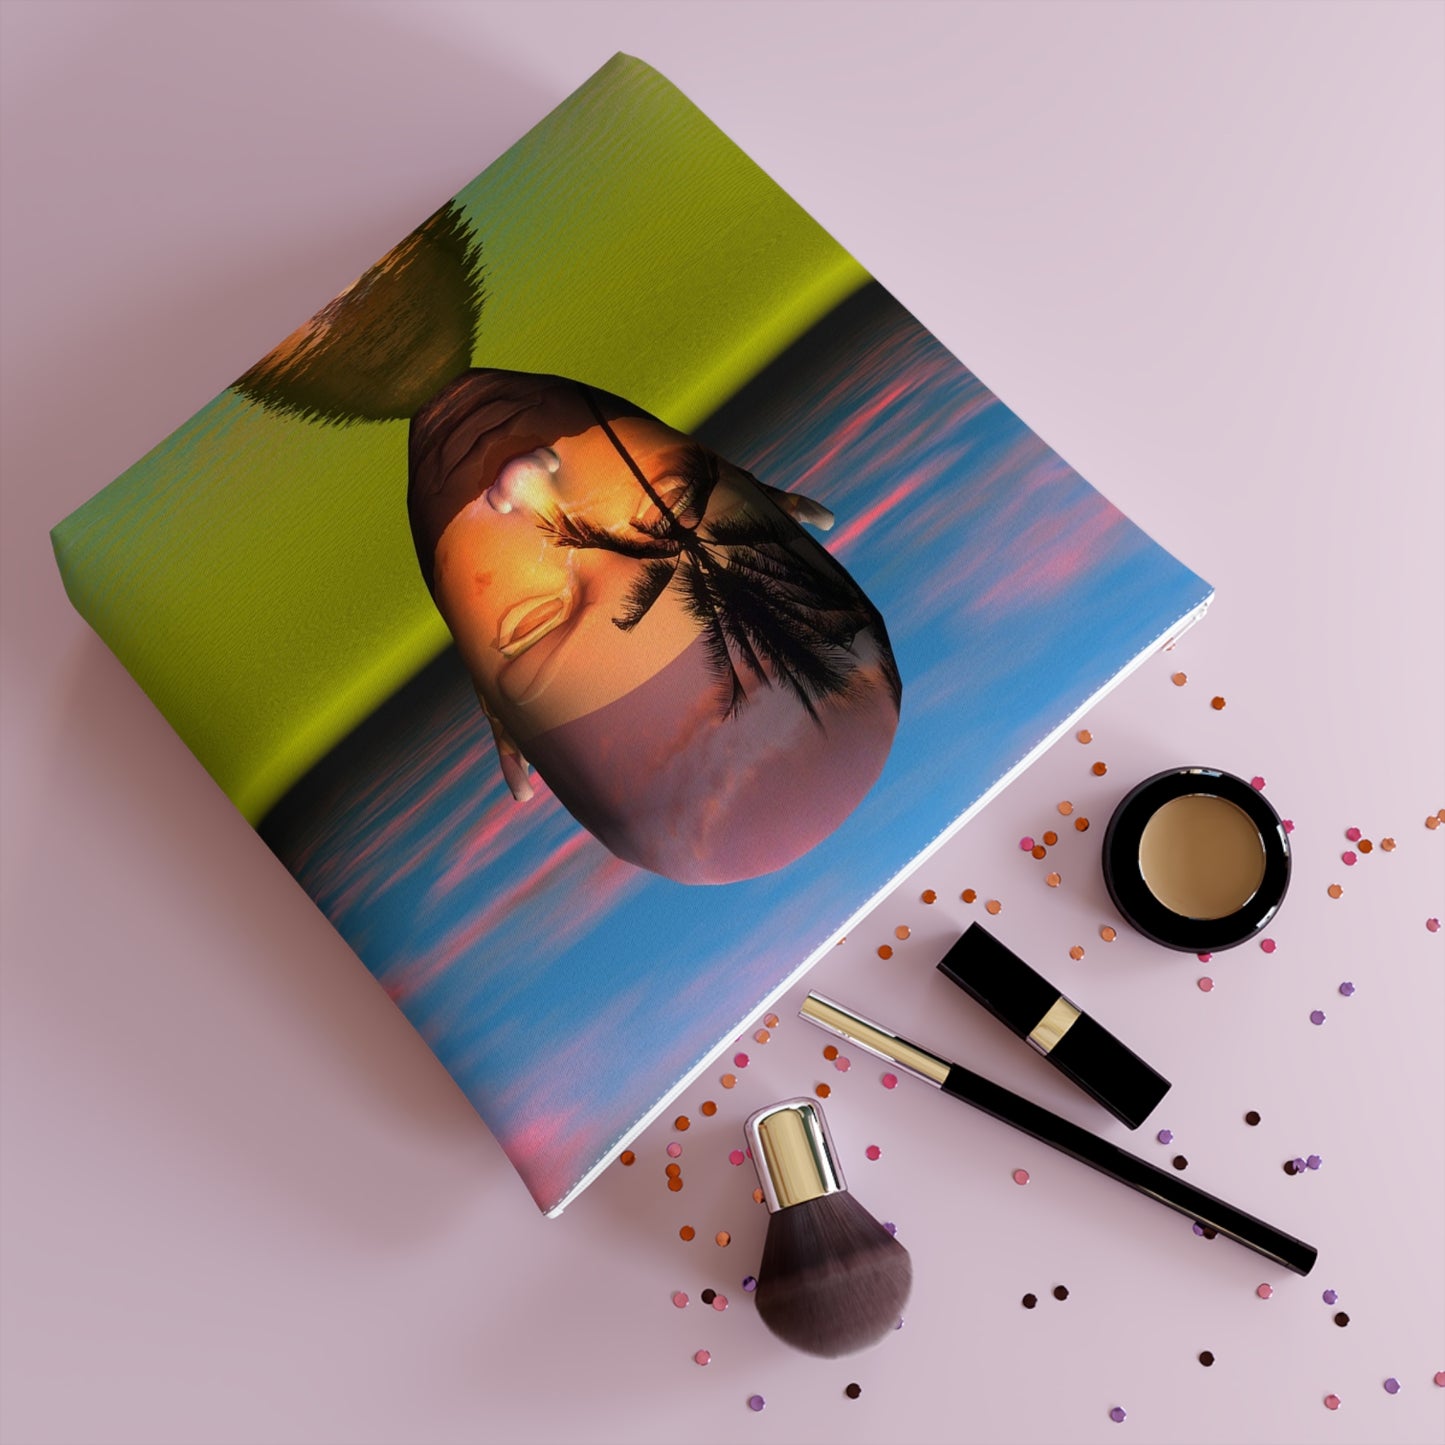 Mind Island Sunrise - Canvas Cosmetic Bag